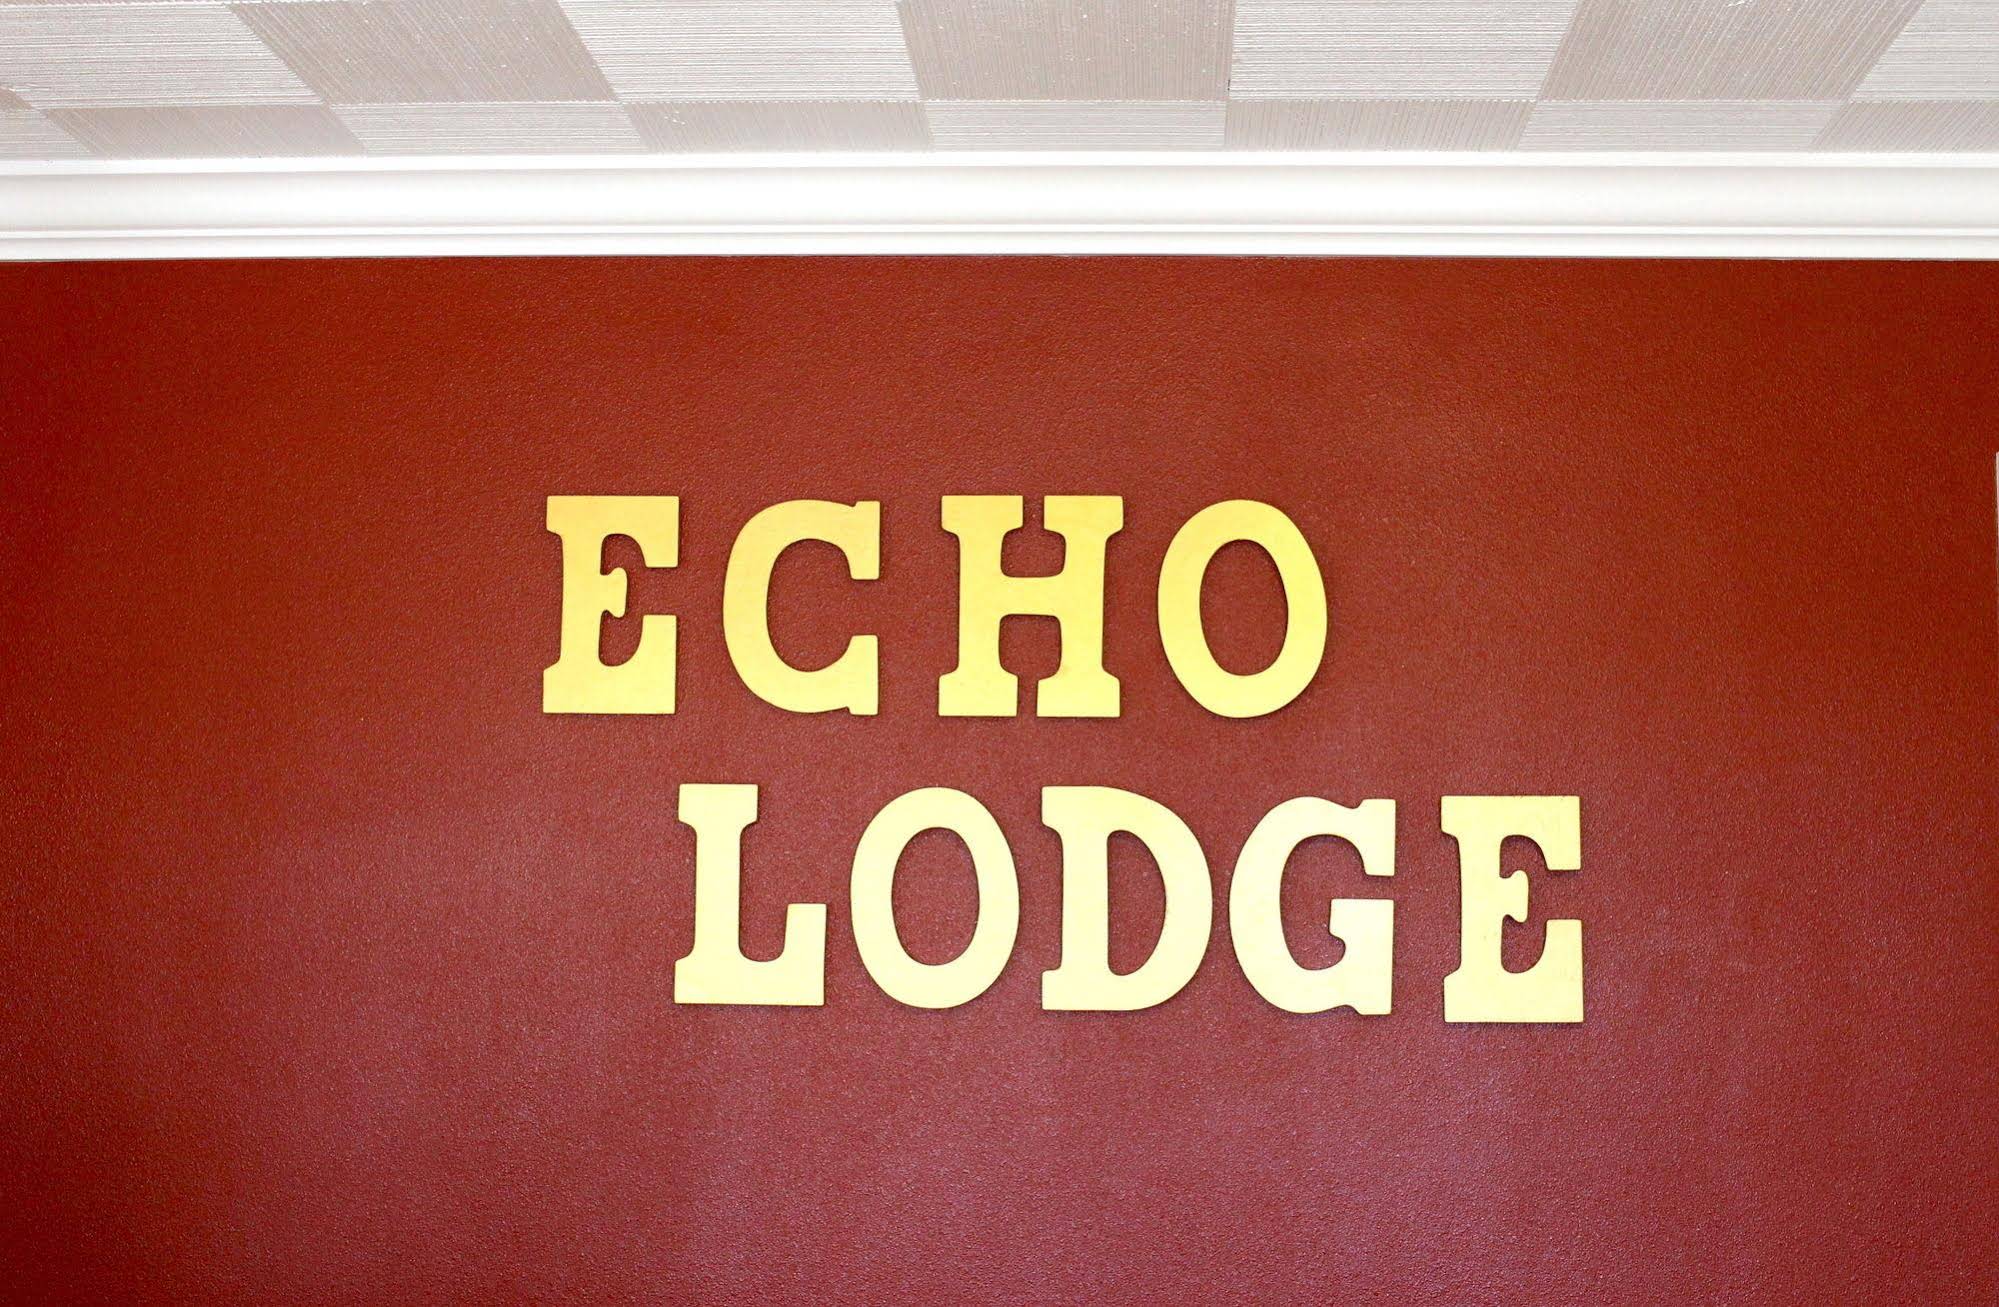 Echo Lodge